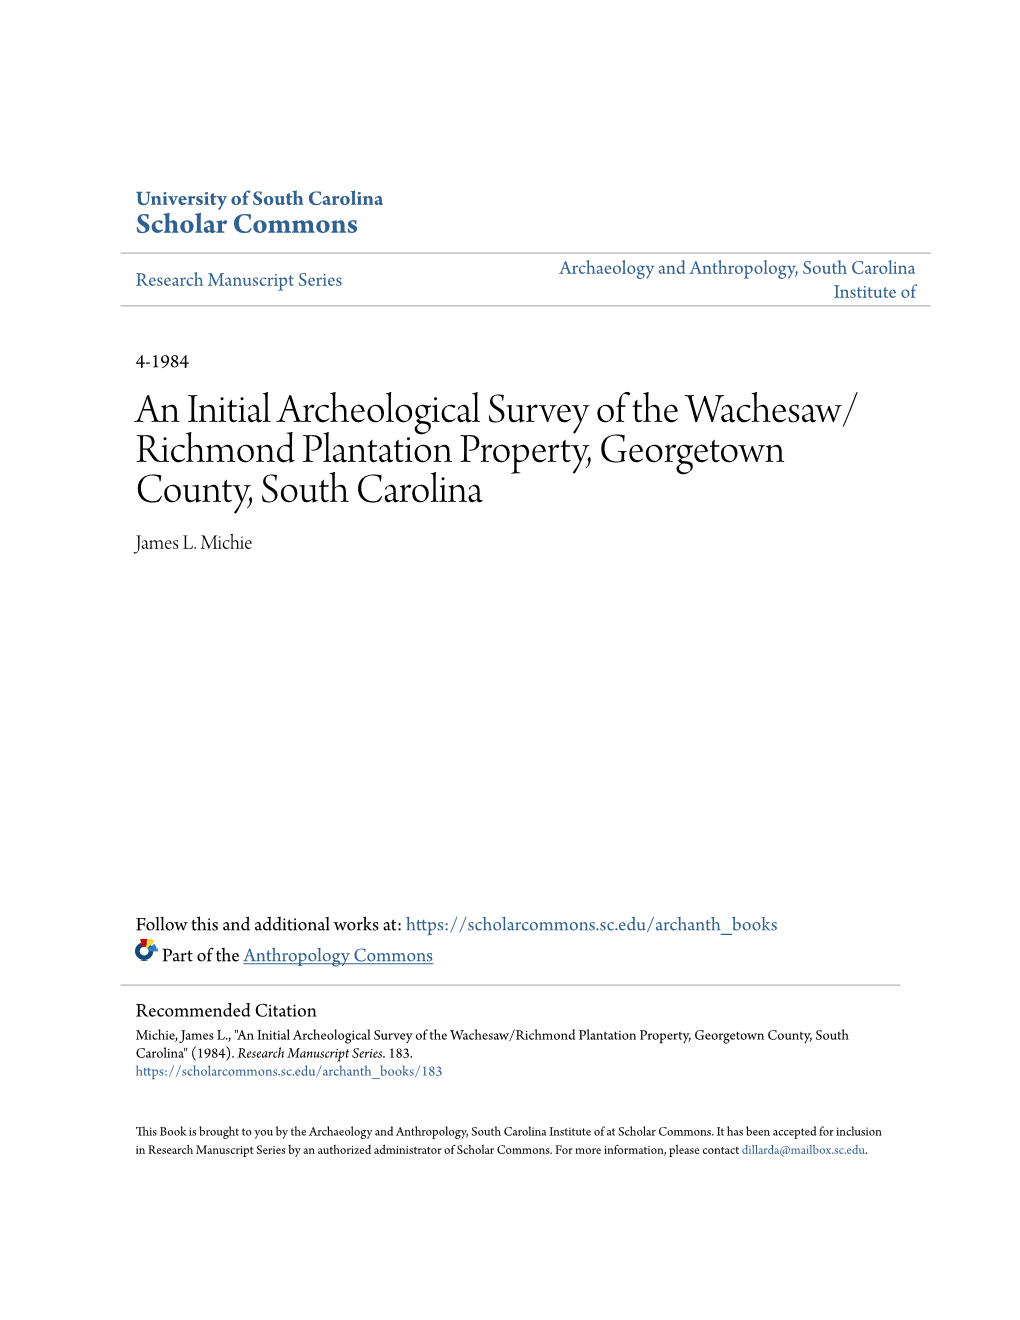 An Initial Archeological Survey of the Wachesaw/Richmond Plantation Property, Georgetown County, South Carolina" (1984)